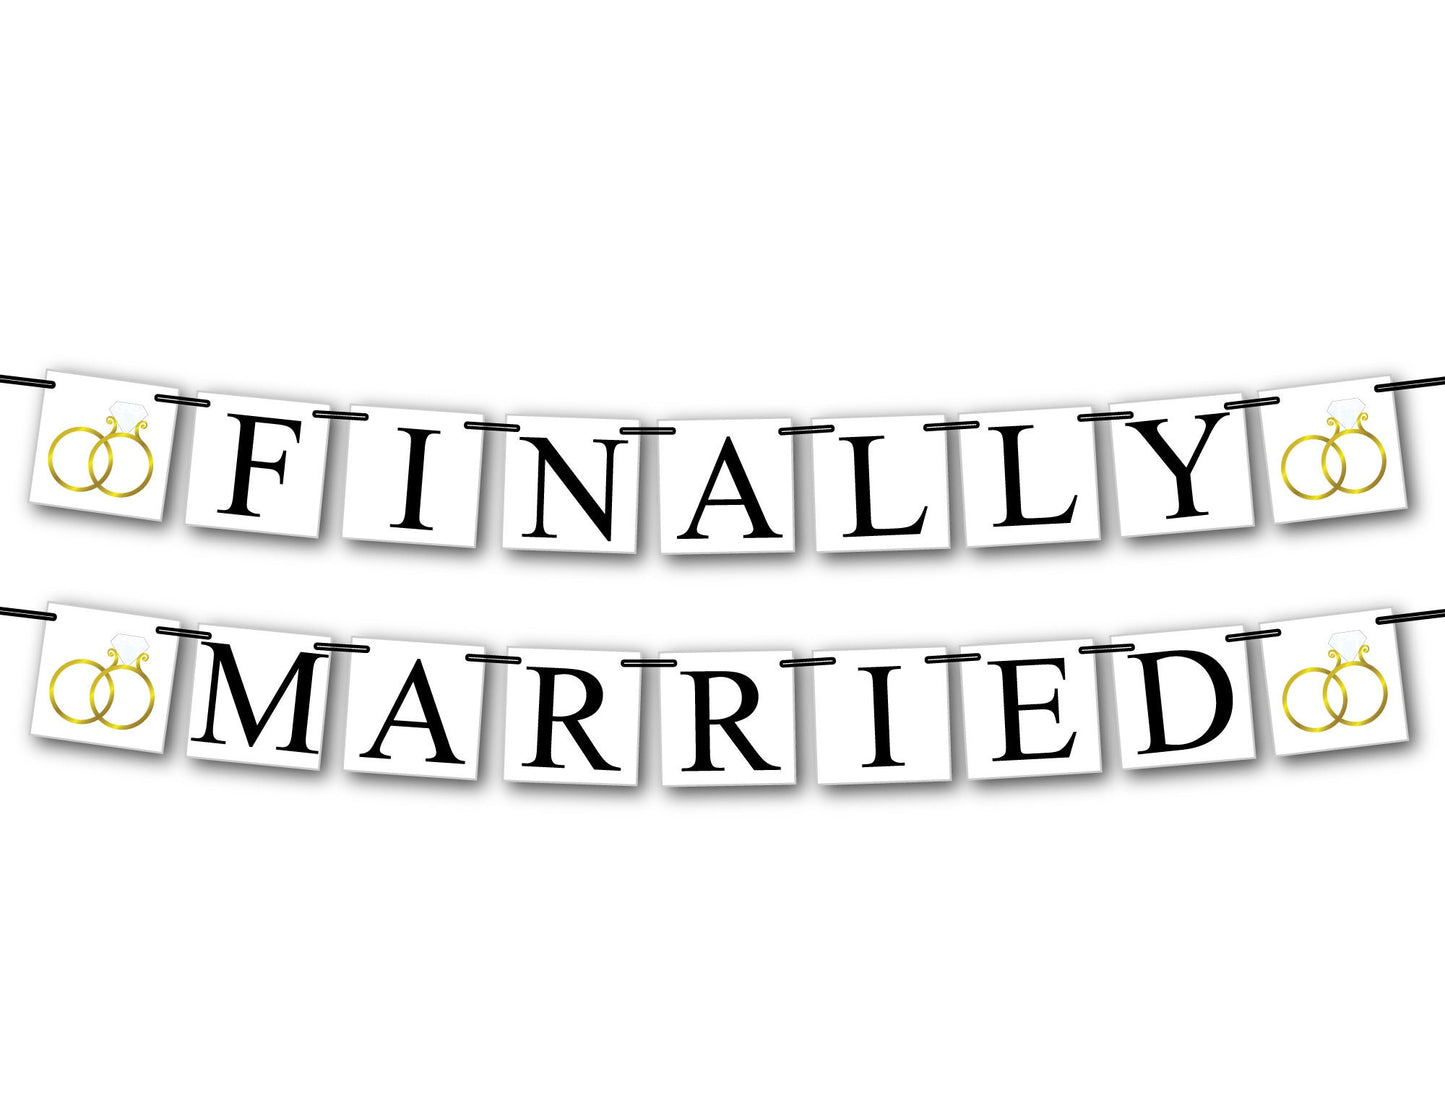 interlocking rings - wedding rings finally married banner - wedding decorations